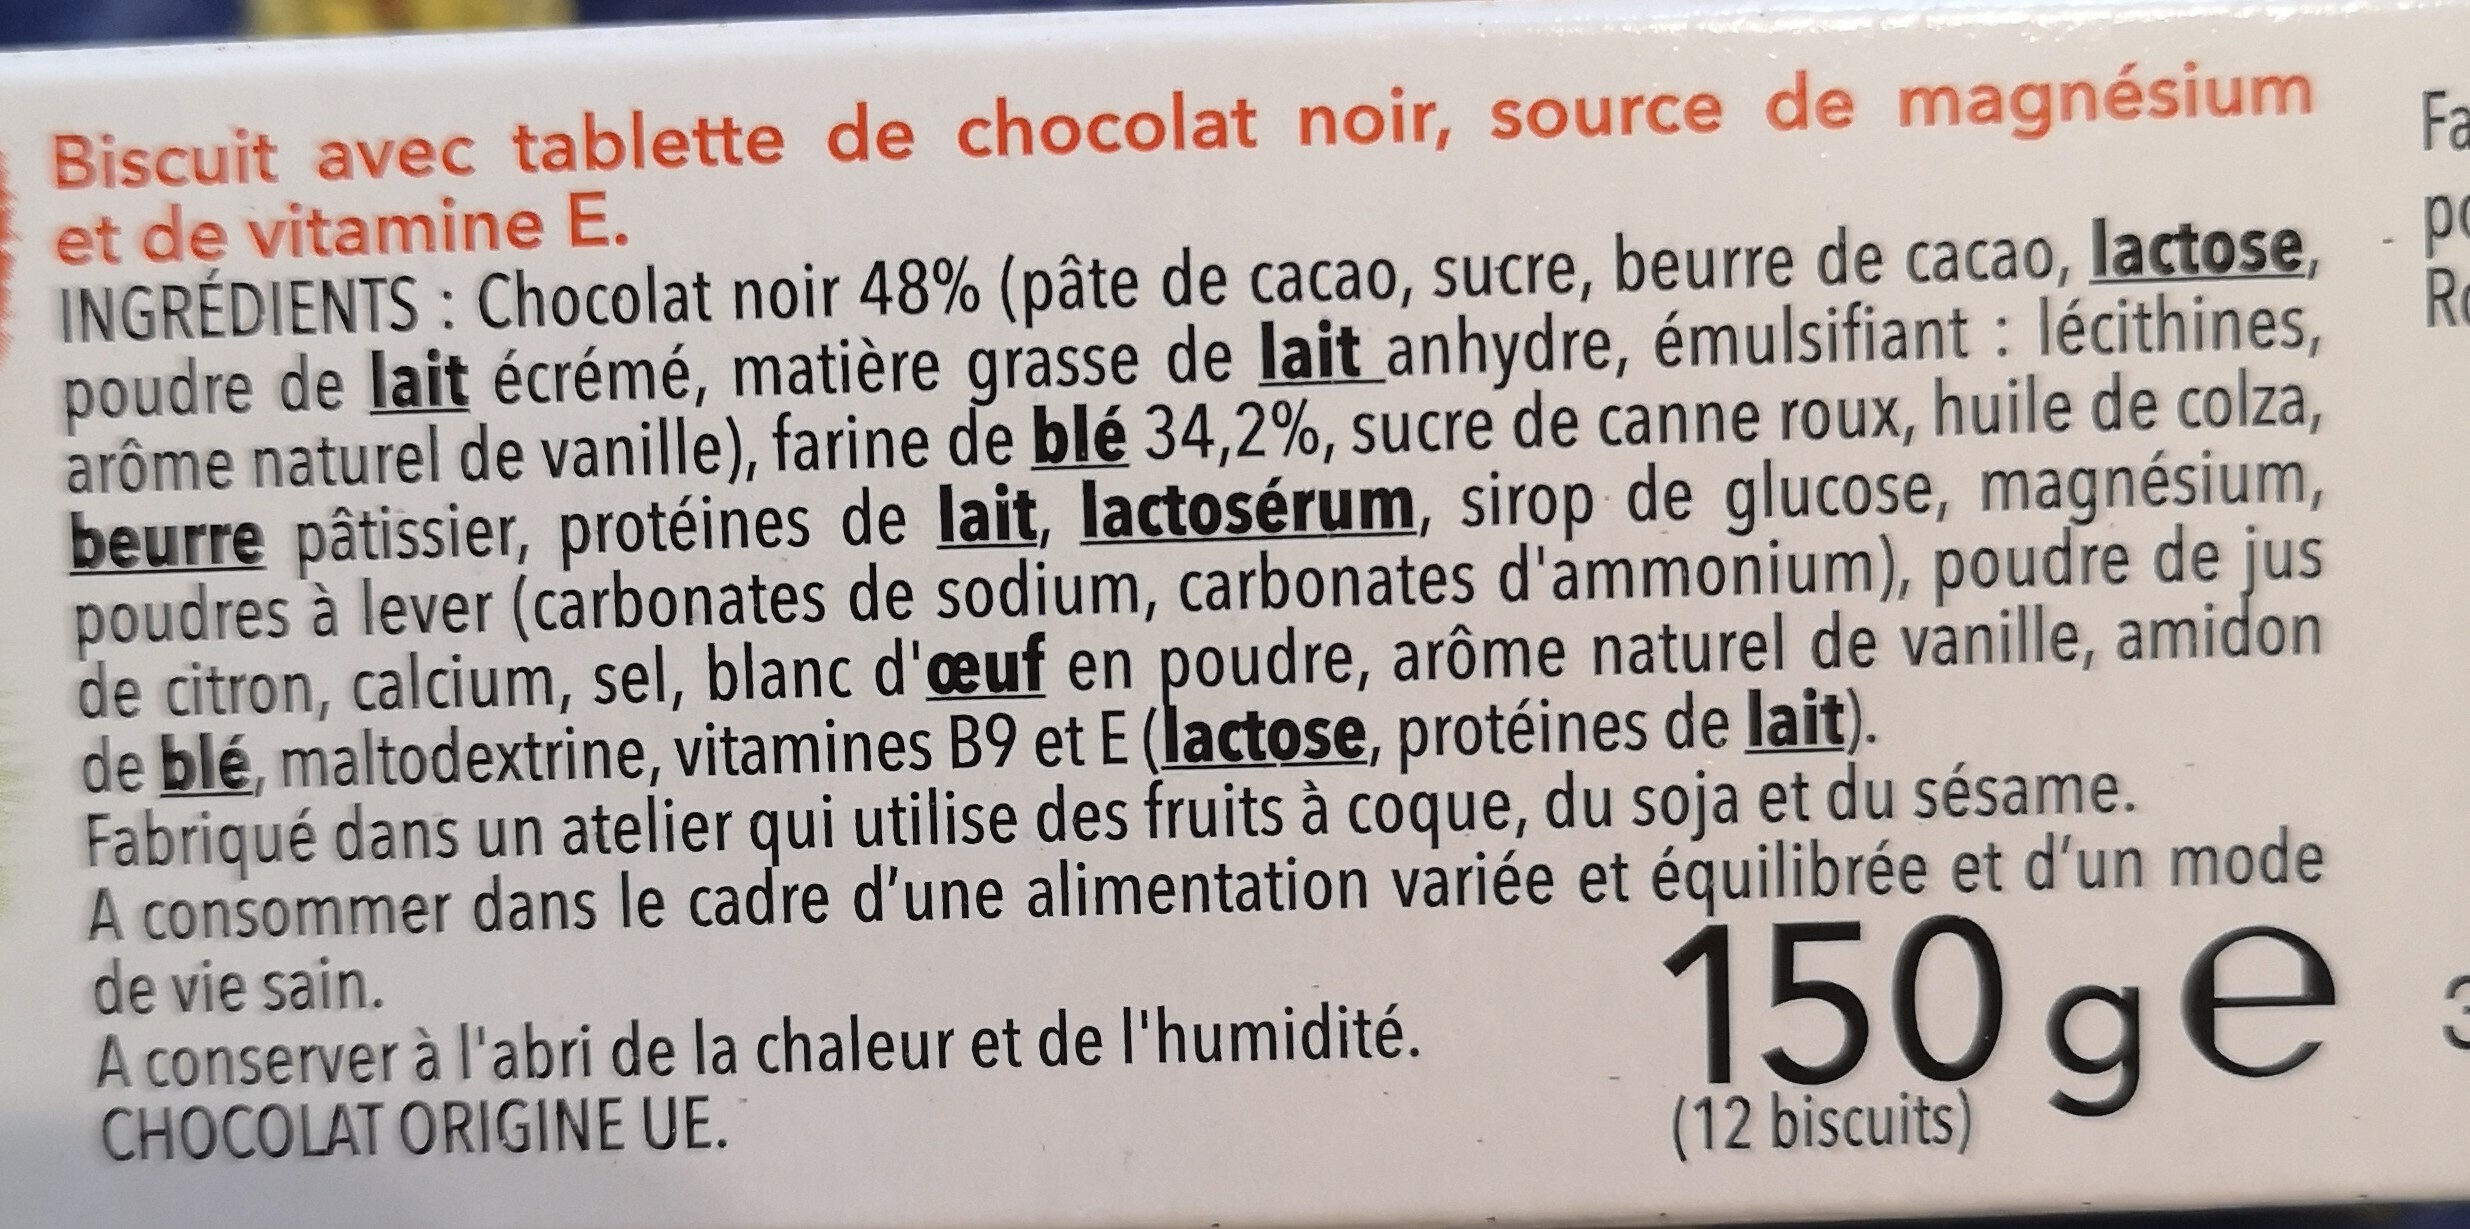 biscuit chocolat noir - Ingrédients